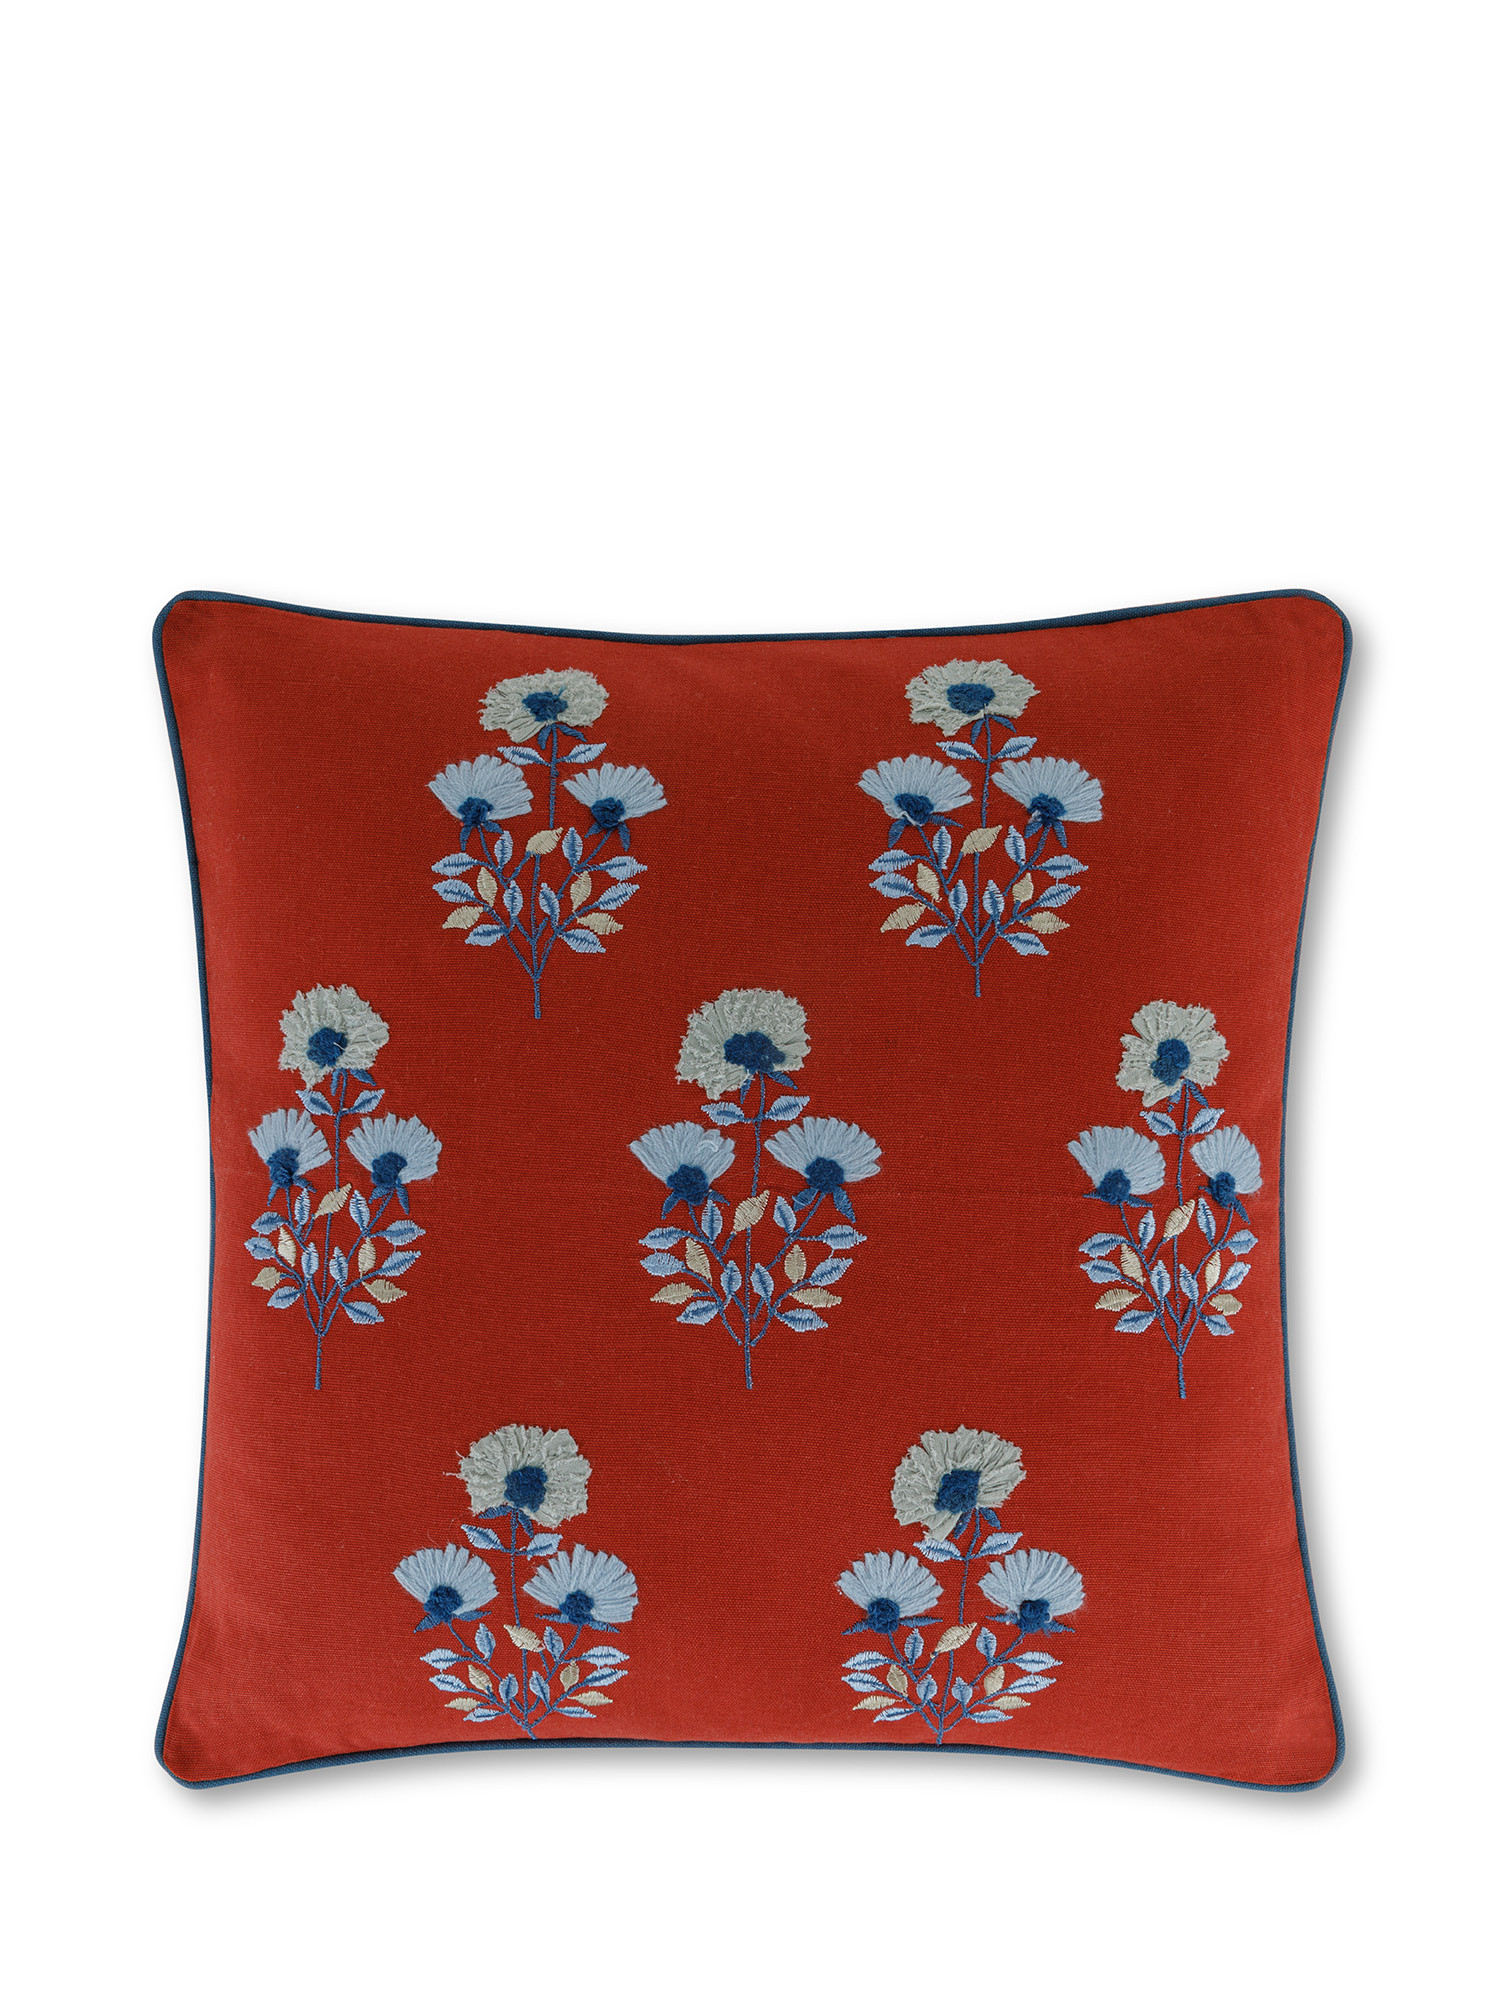 Cuscino in tessuto ricamato con fiori 45x45 cm, Rosso, large image number 0